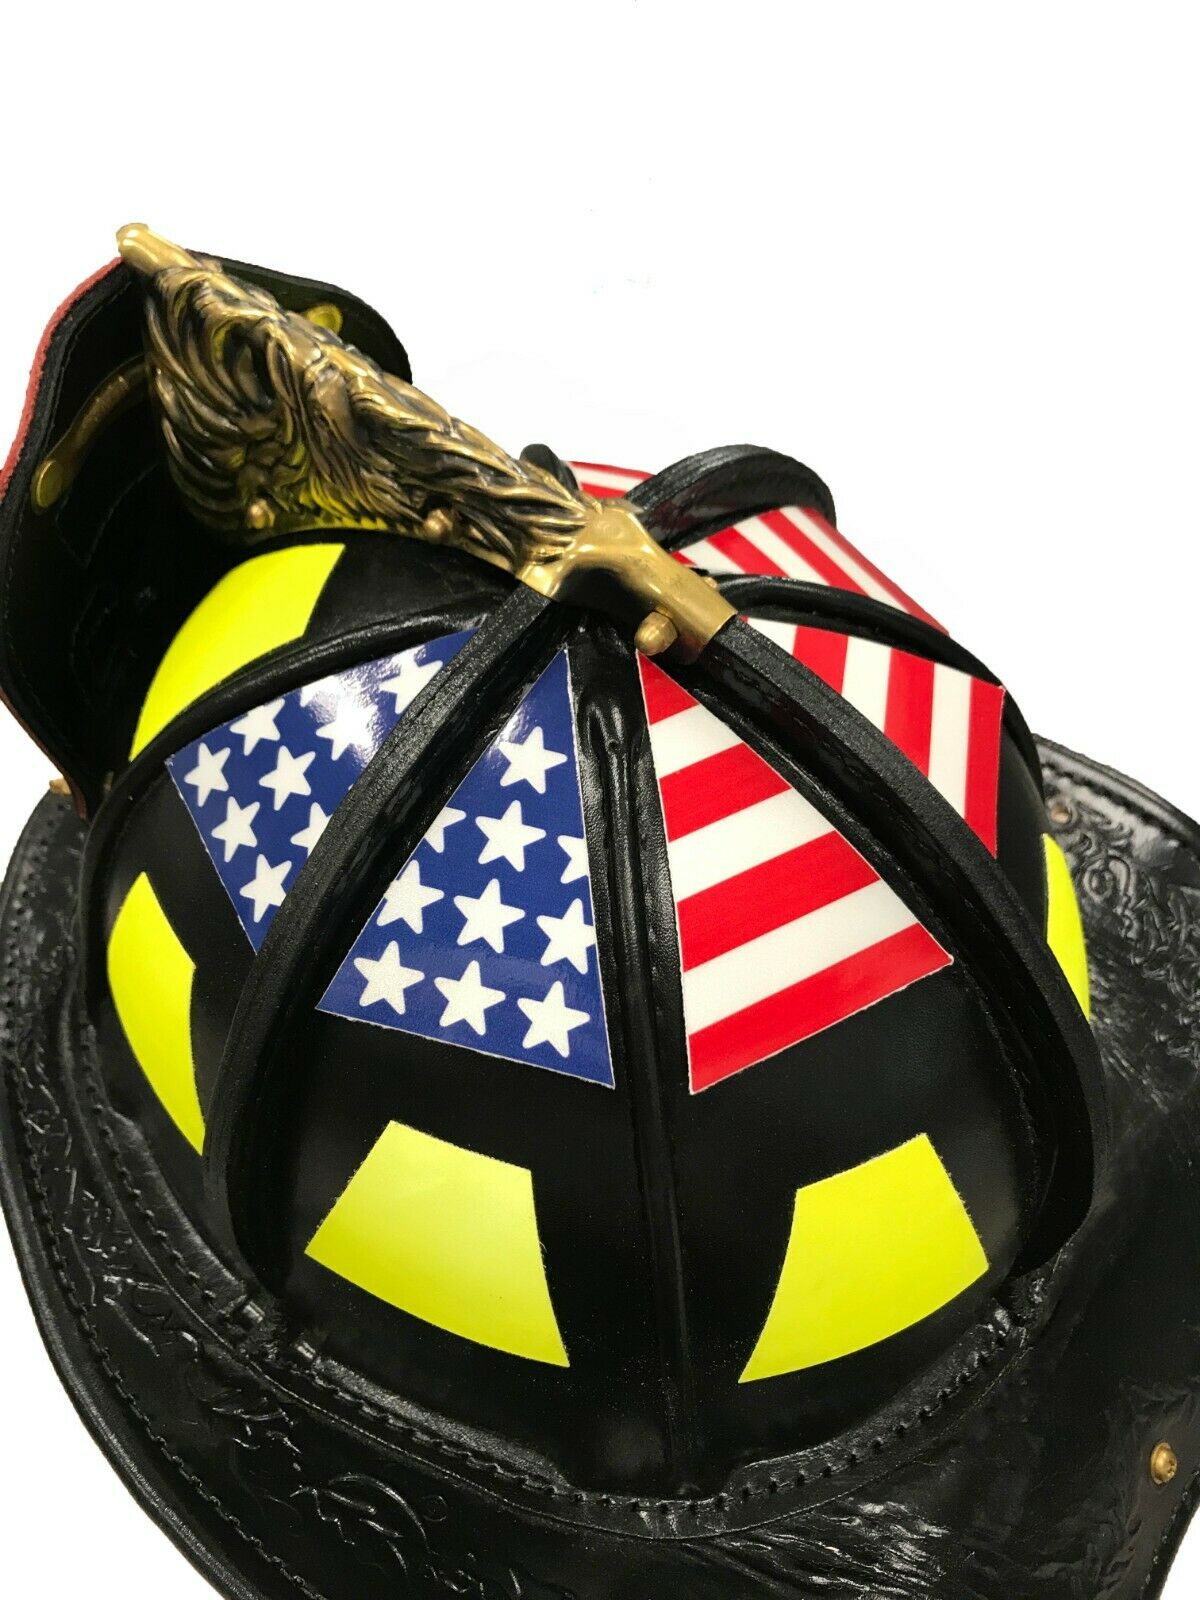 Line2design Helmet Decals - Firefighter Usa / American Flag Fire Helmet 6-part